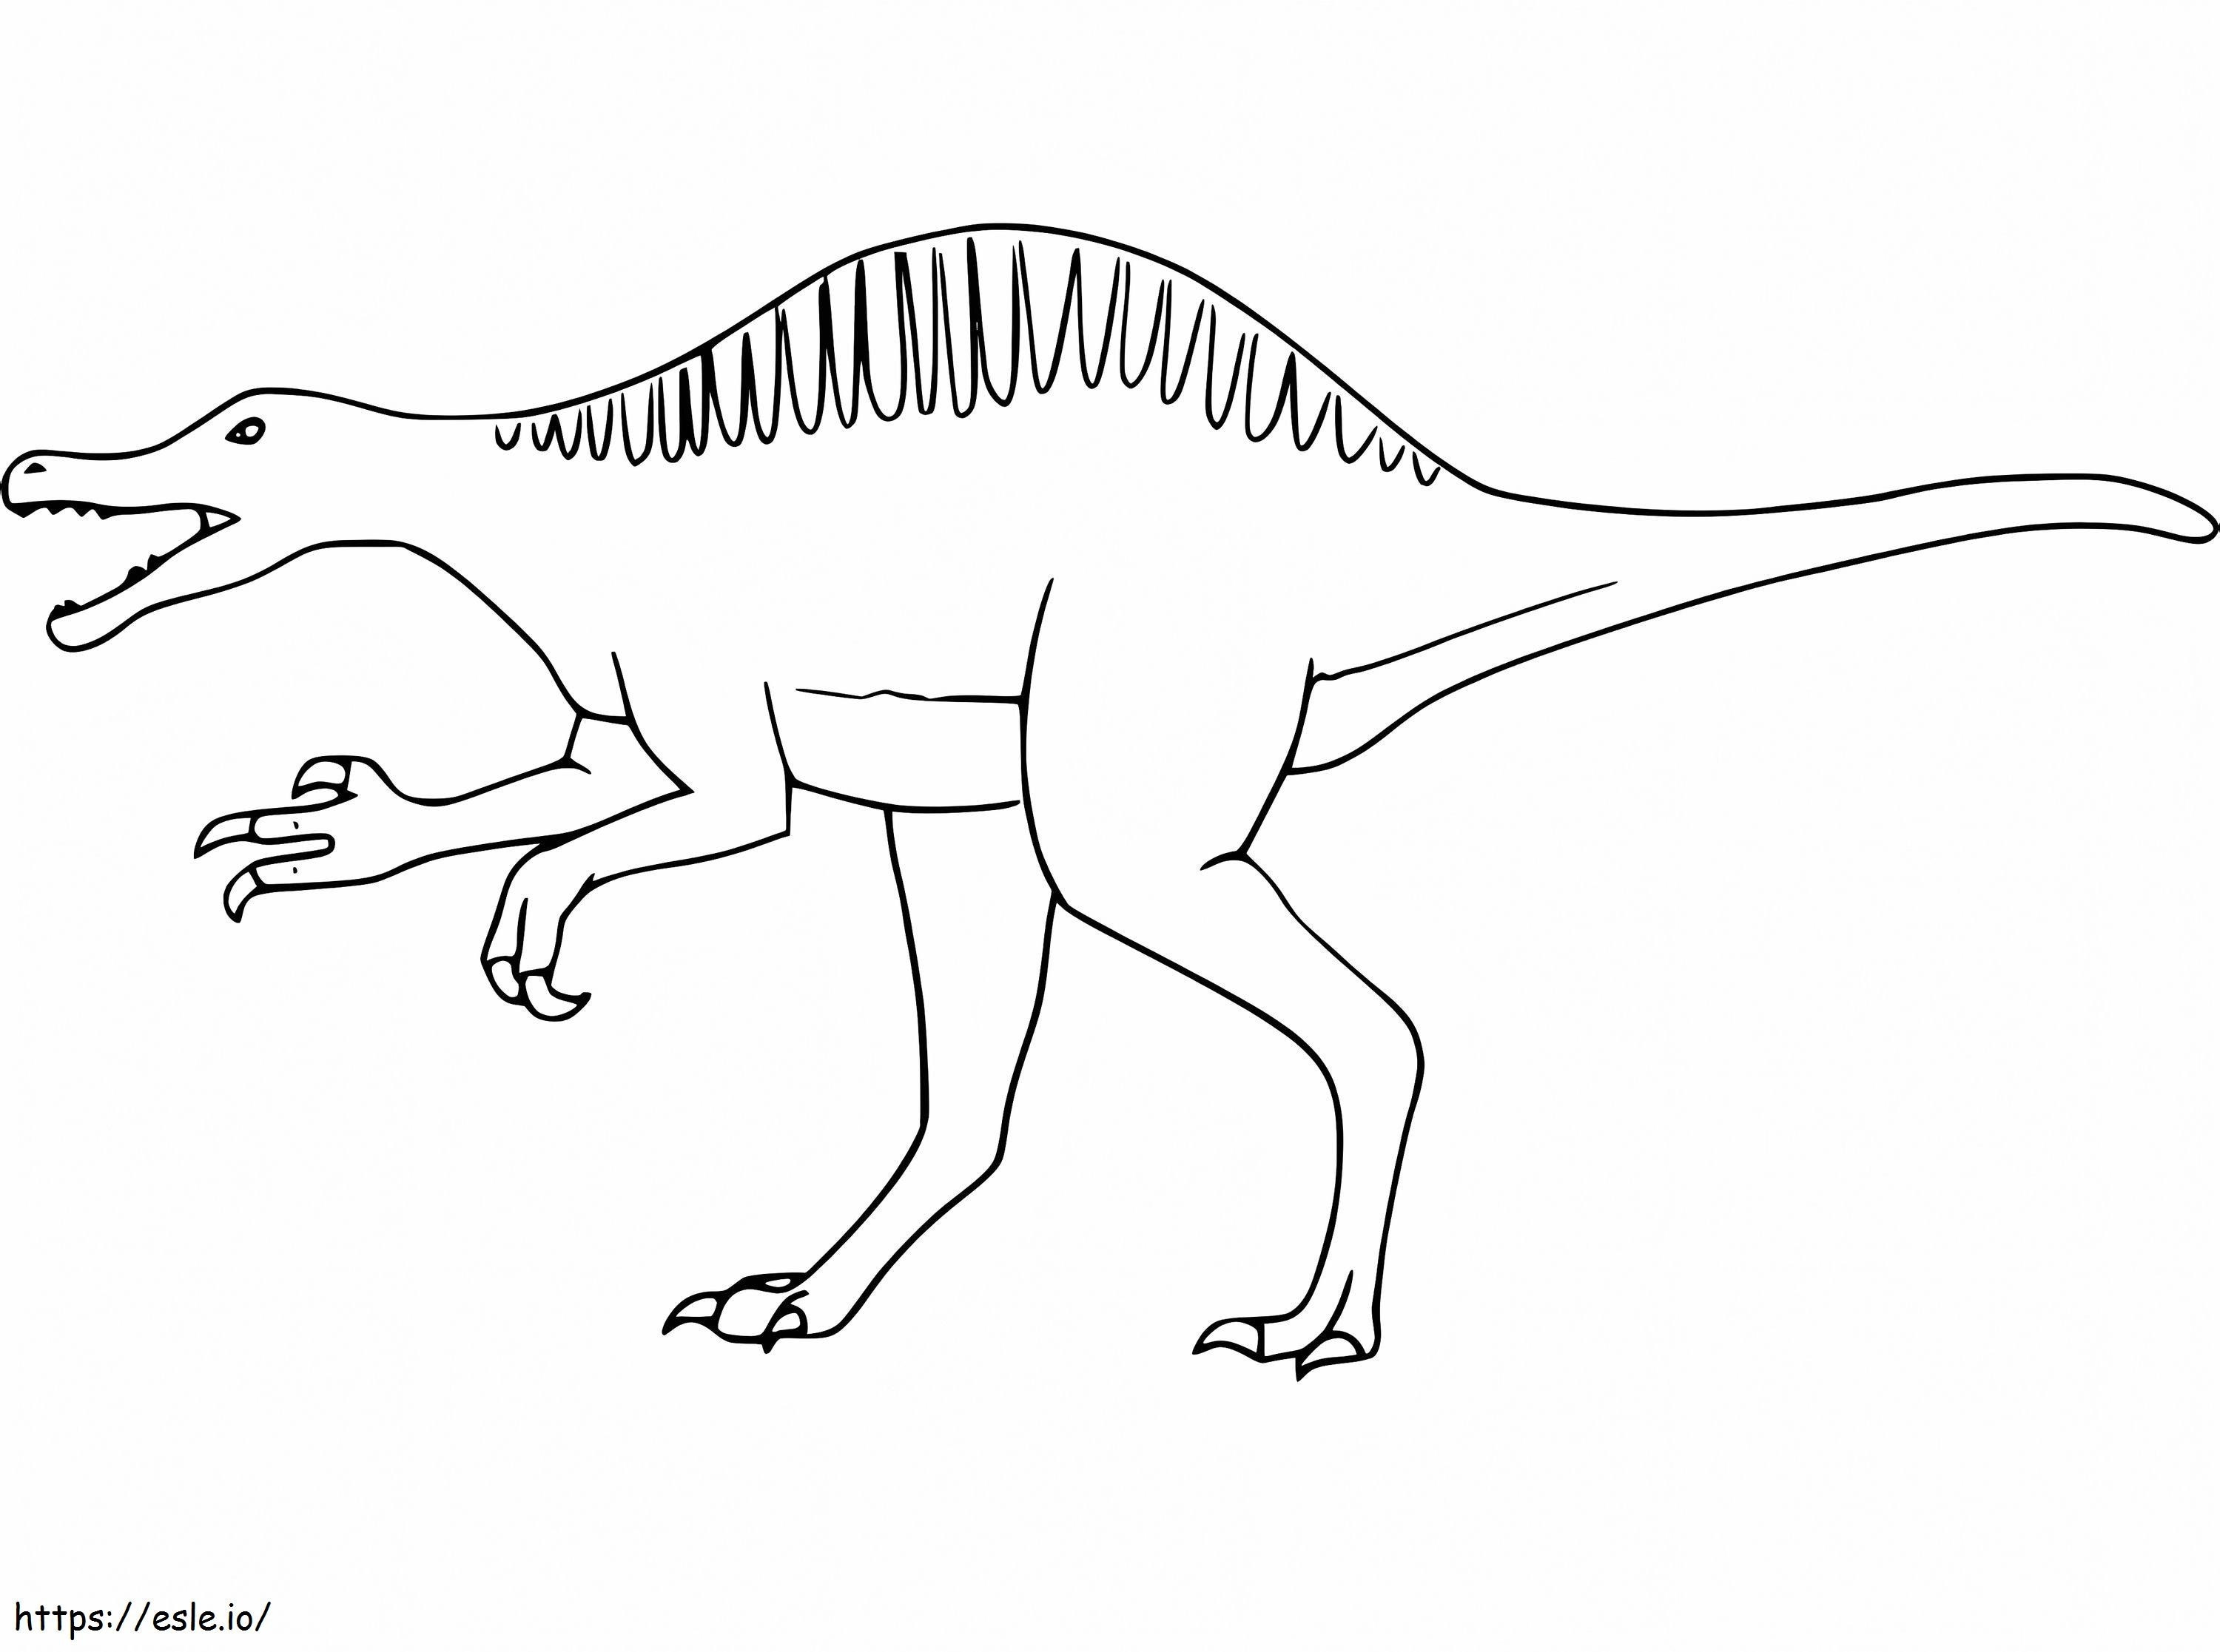 Spinosaurus 1 kifestő